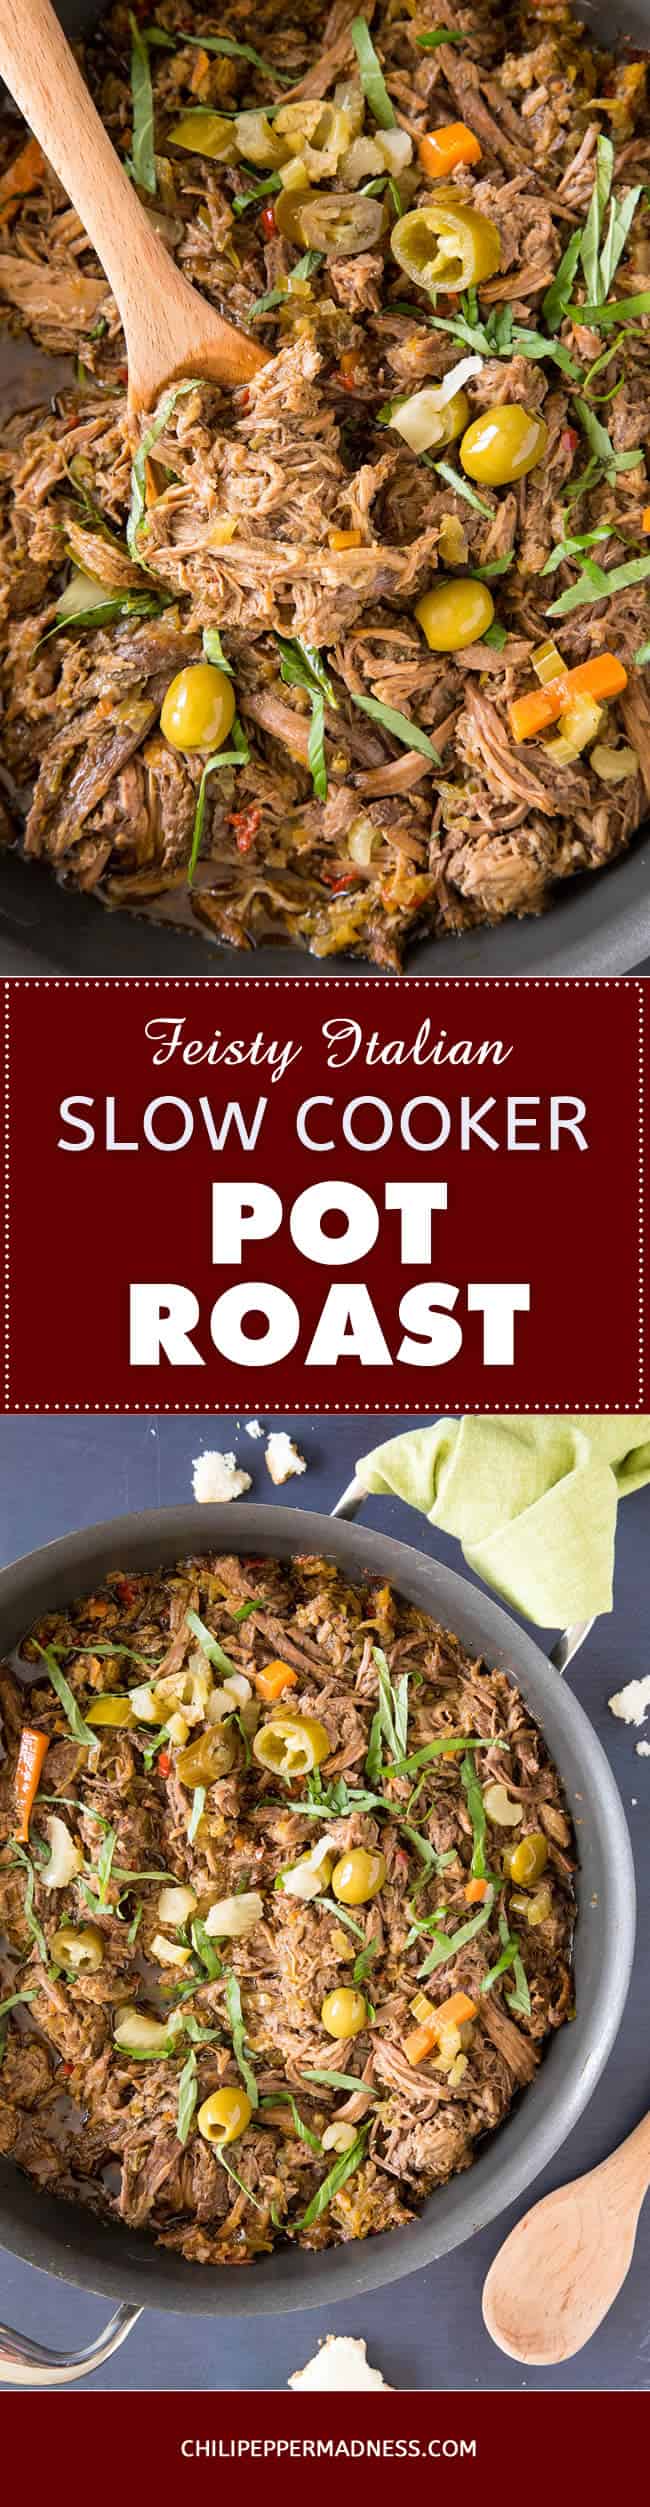 Feisty Italian Slow Cooker Pot Roast - Recipe | ChiliPepperMadness.com #potroast #beefroast #slowcooker #crockpot #spicyfood